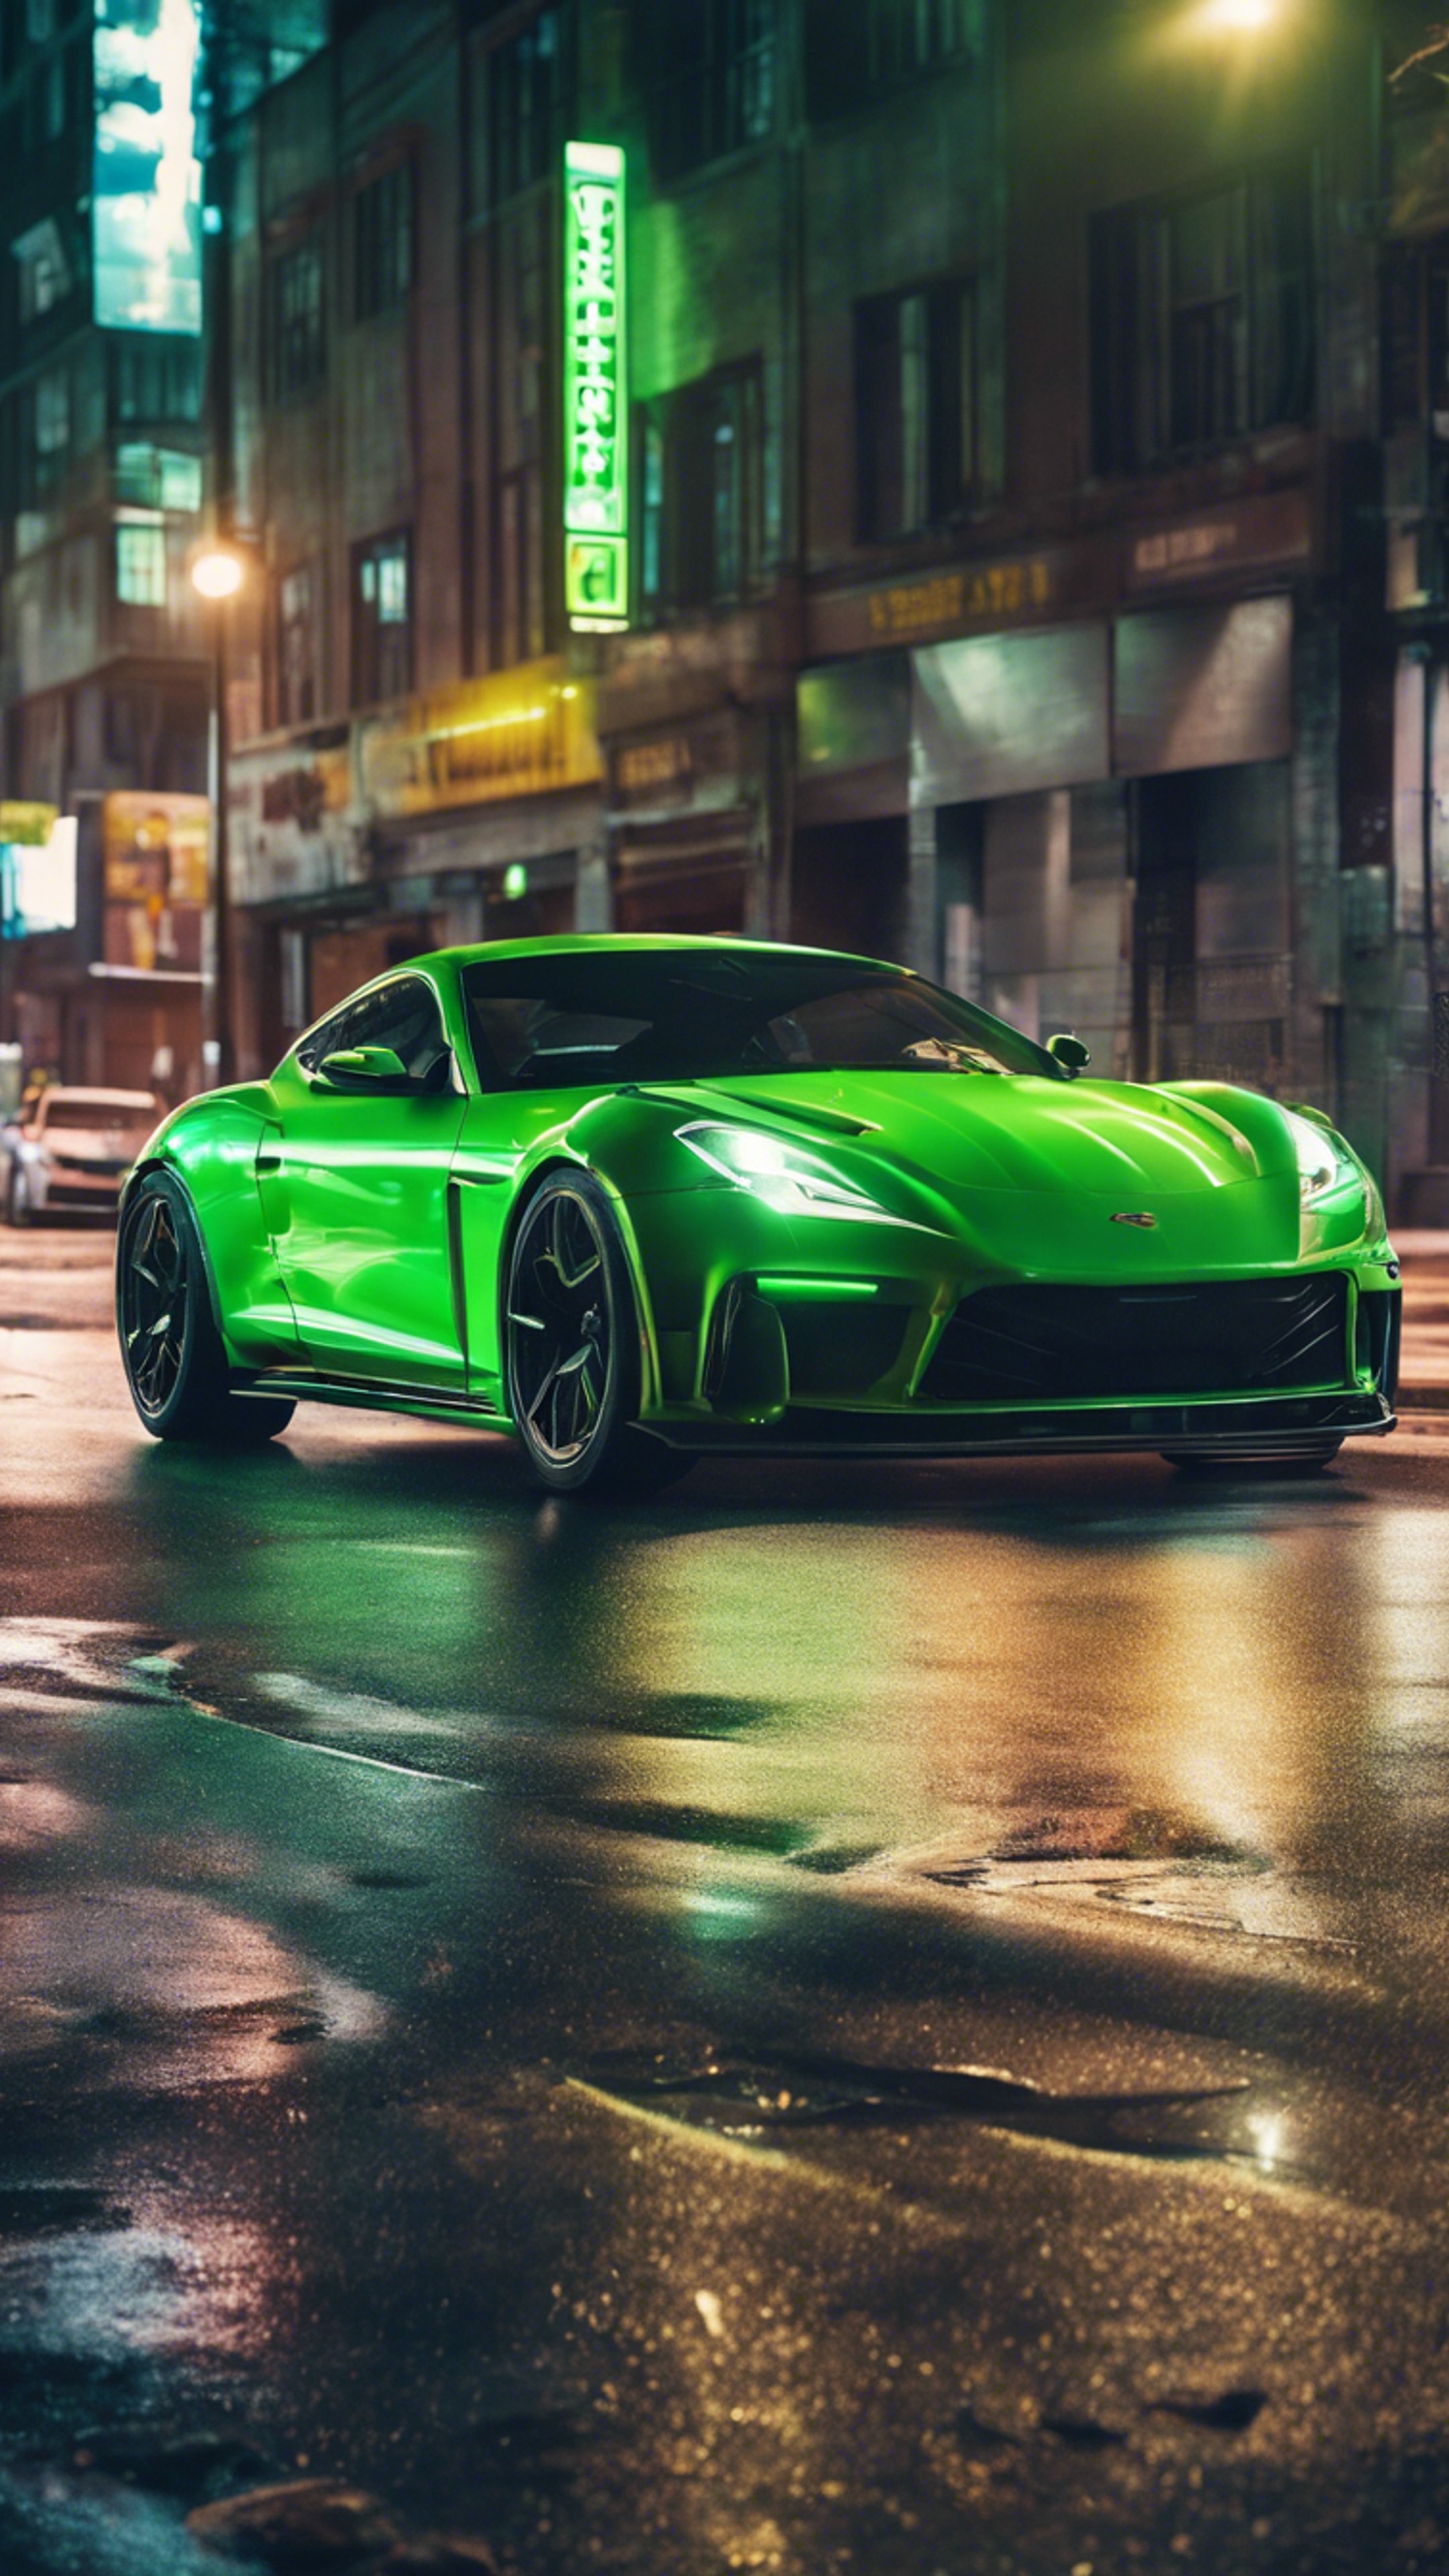 A cool neon green sports car racing down a city street at night. Fondo de pantalla[ff2aa681813144c0b5f6]